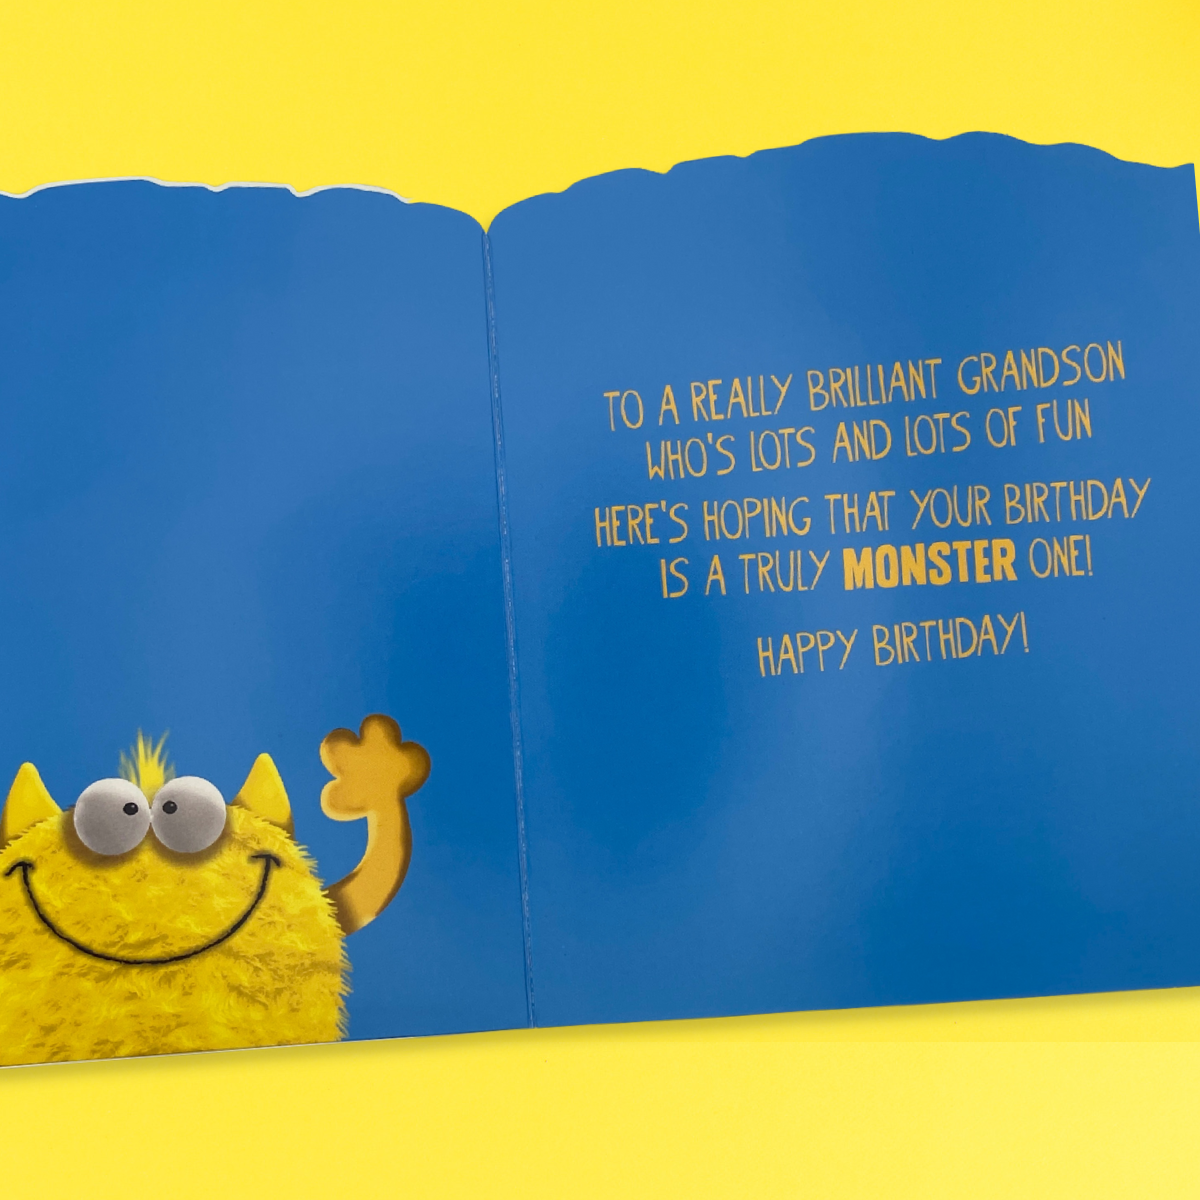 Grandson Birthday Card - My Monster